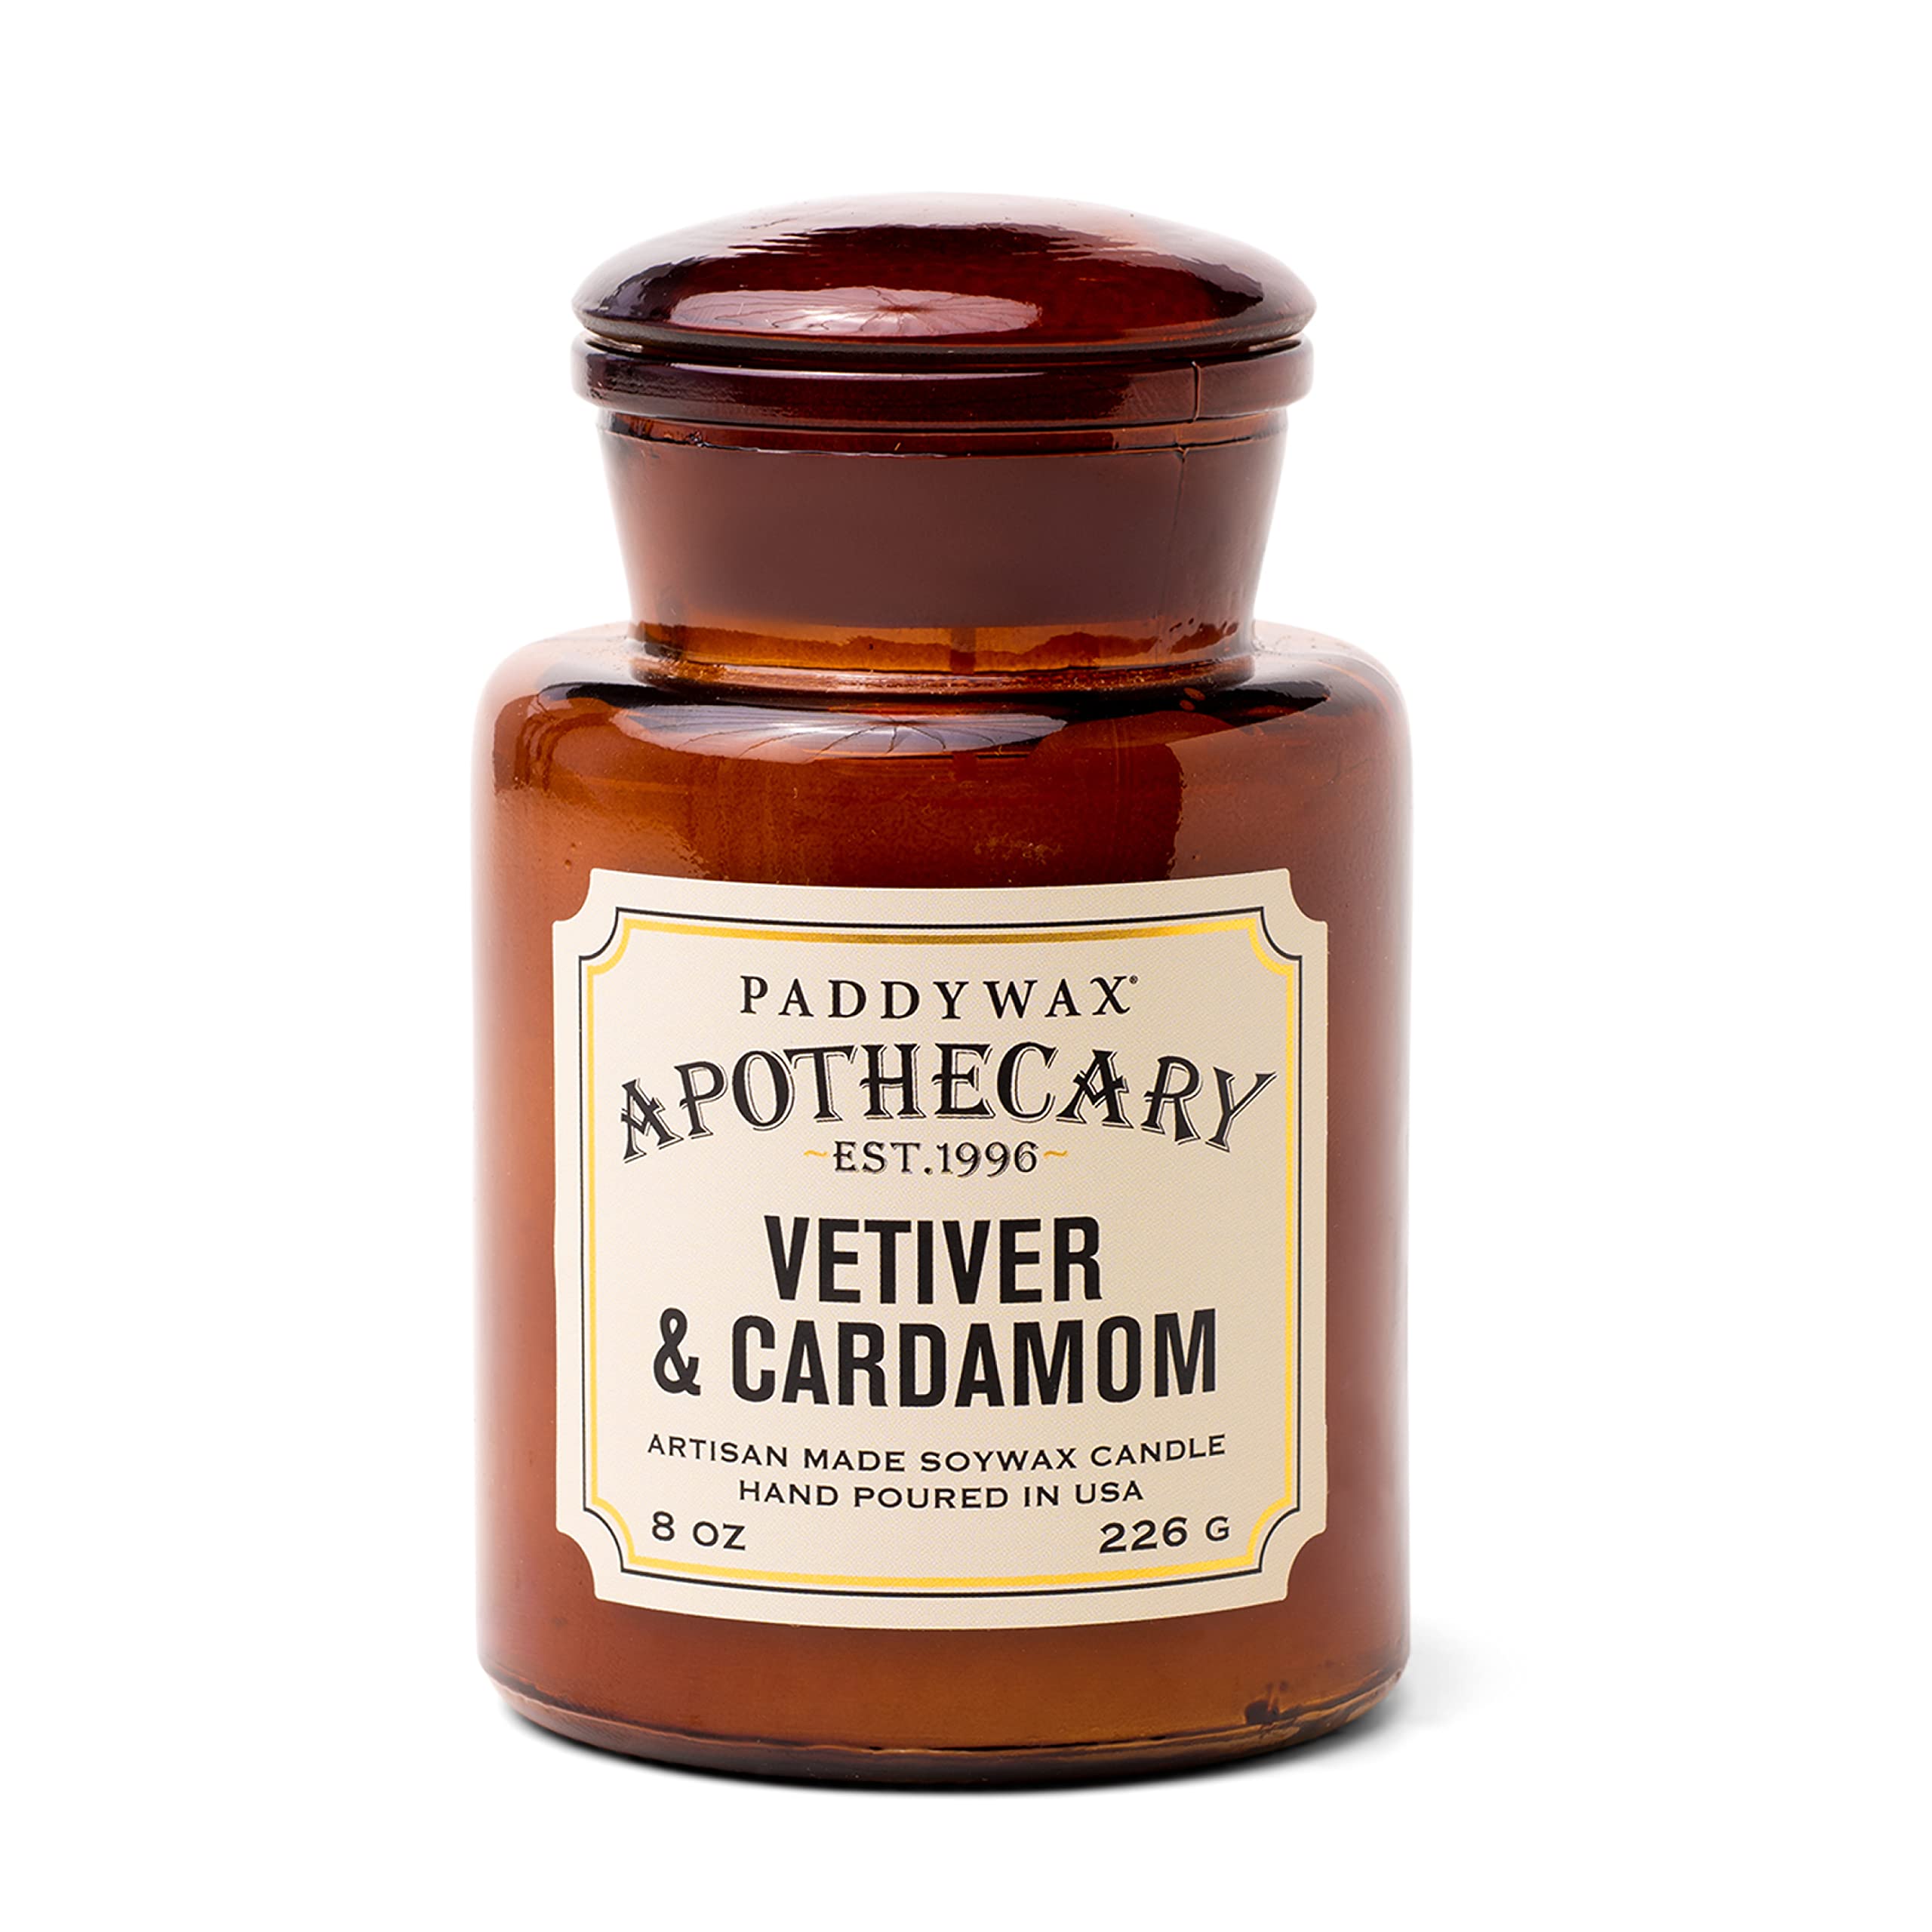 Paddywax Apothecary Collection, Jar Kerze, Meersalz/Salbei, 237 ml, Vetiver/Cardamom, 227 g